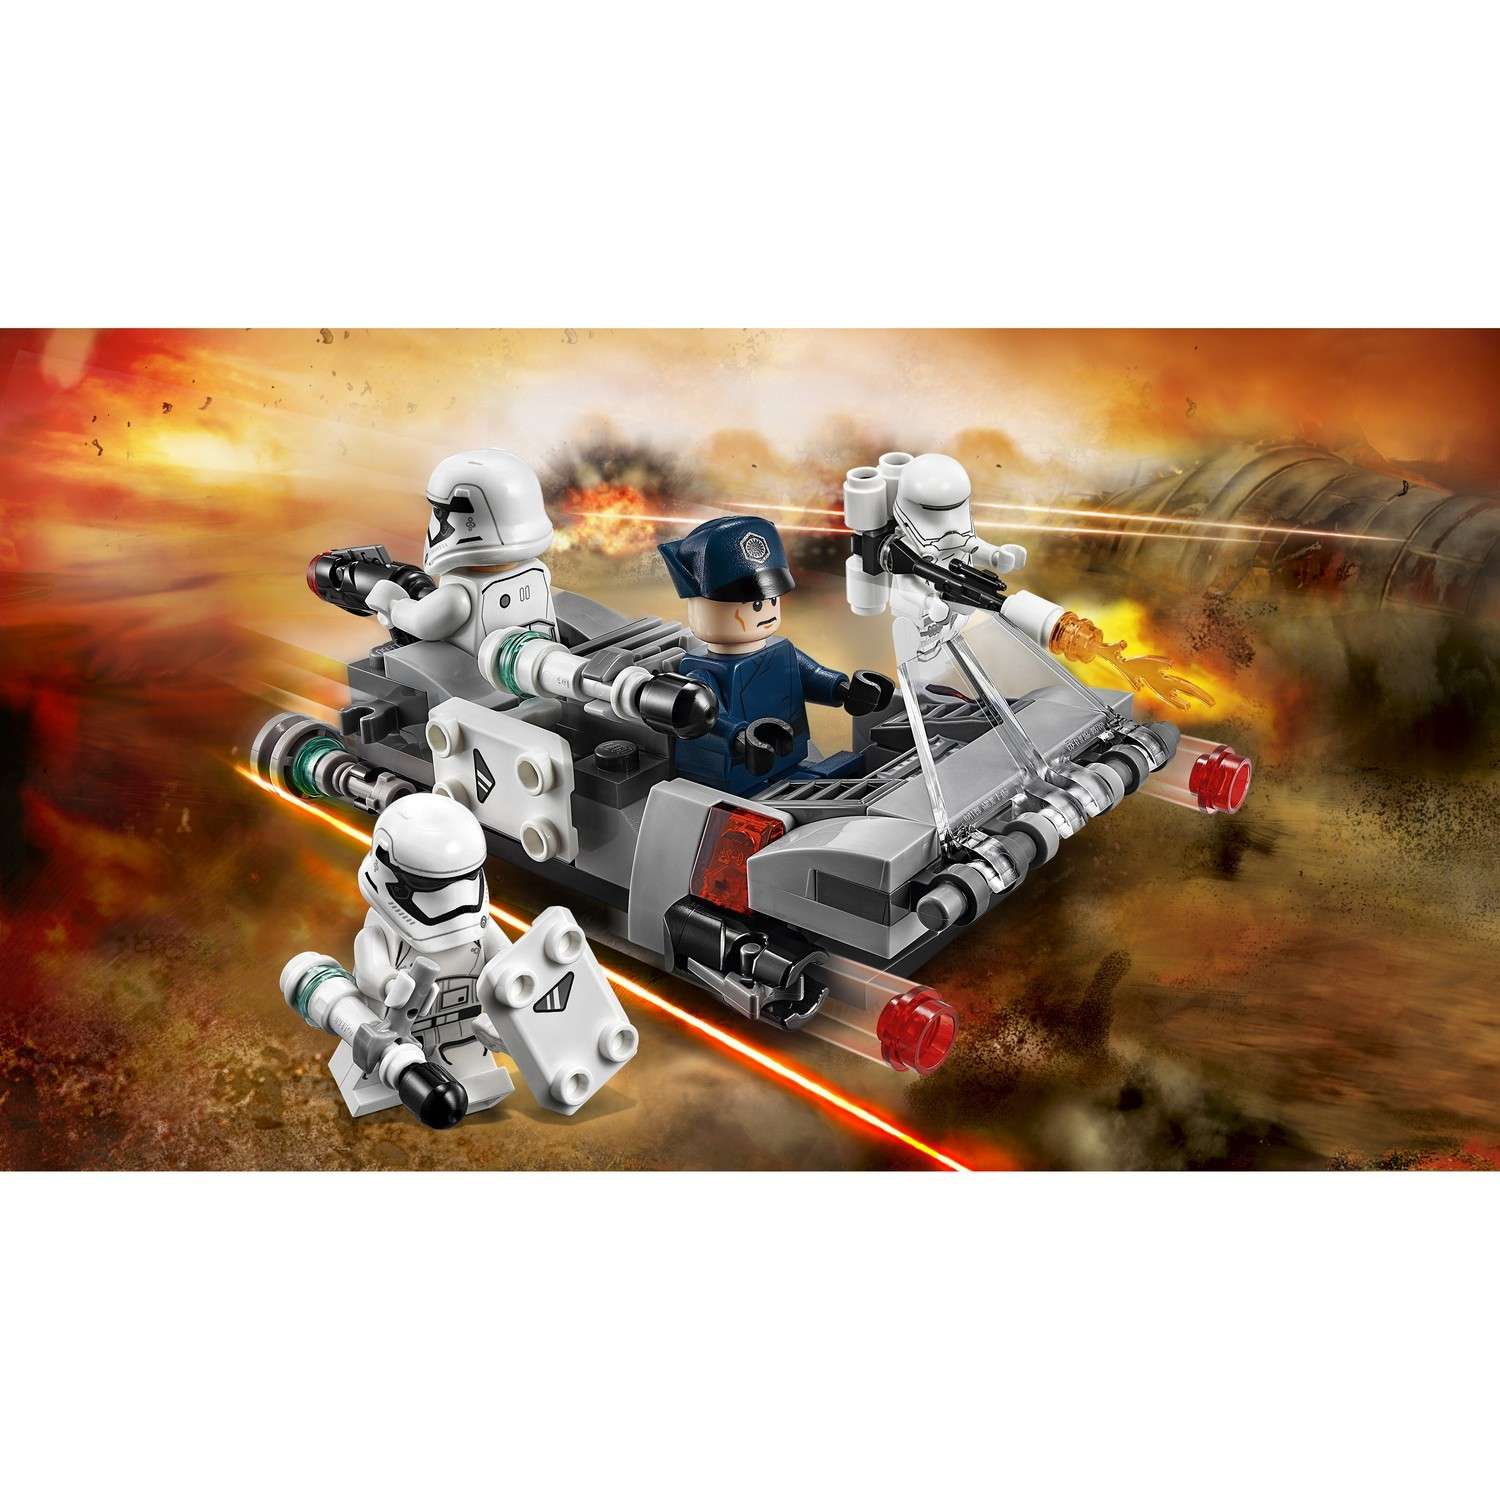 Конструктор LEGO Star Wars TM Спидер Первого ордена (75166) - фото 4